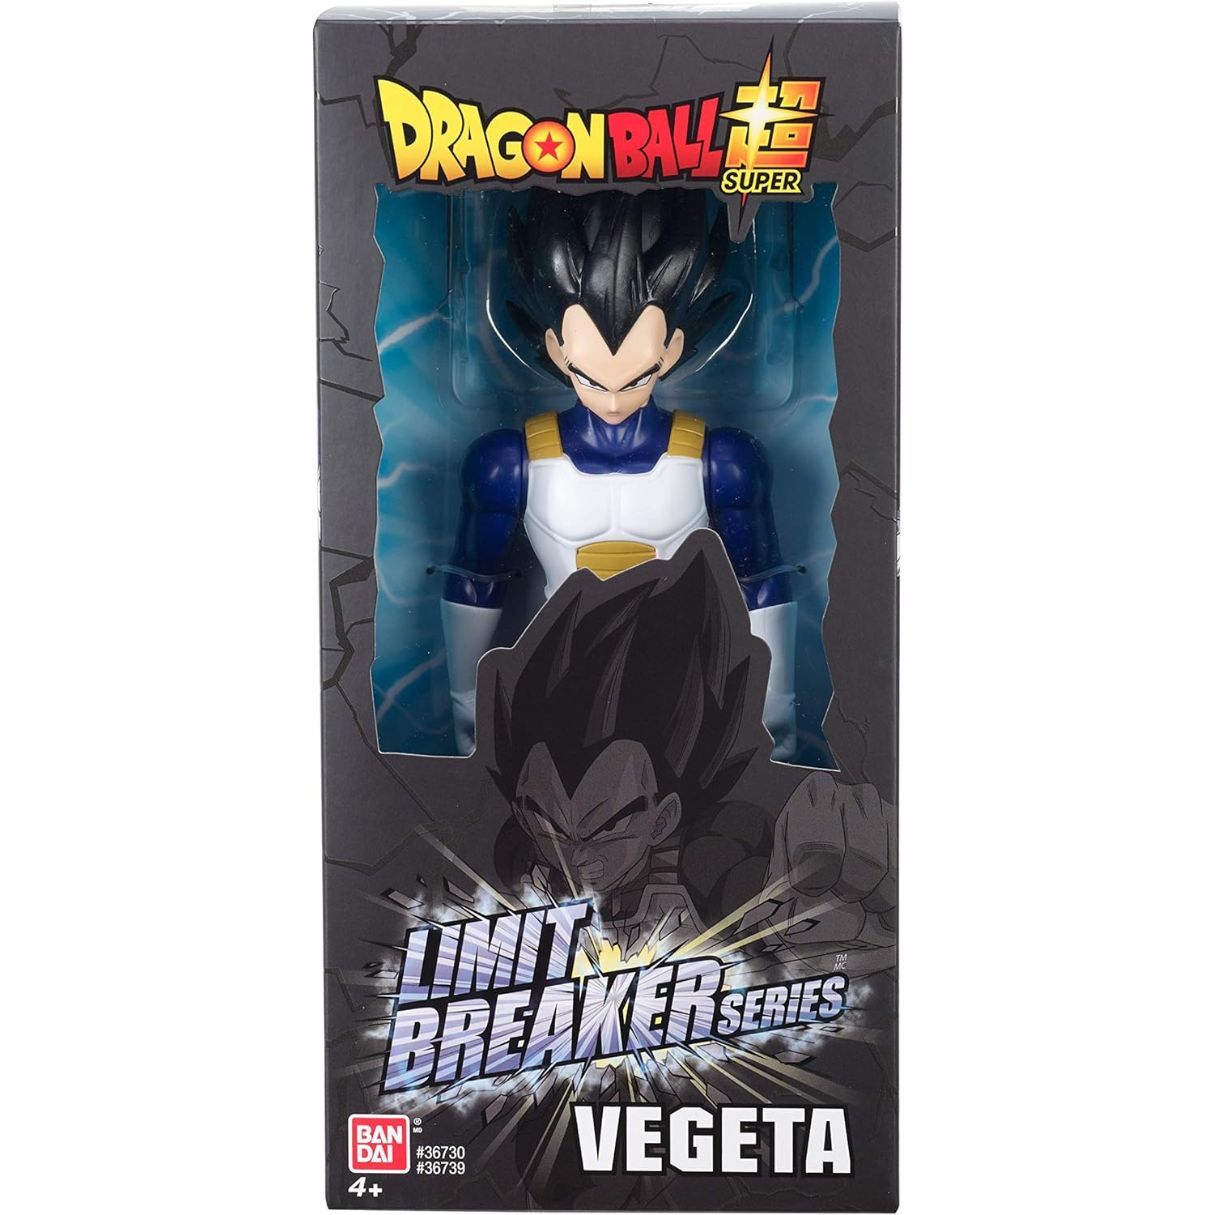 Dragon Ball Super Limit Breaker 12" Vegeta Action Figure - Series 4 (36739)